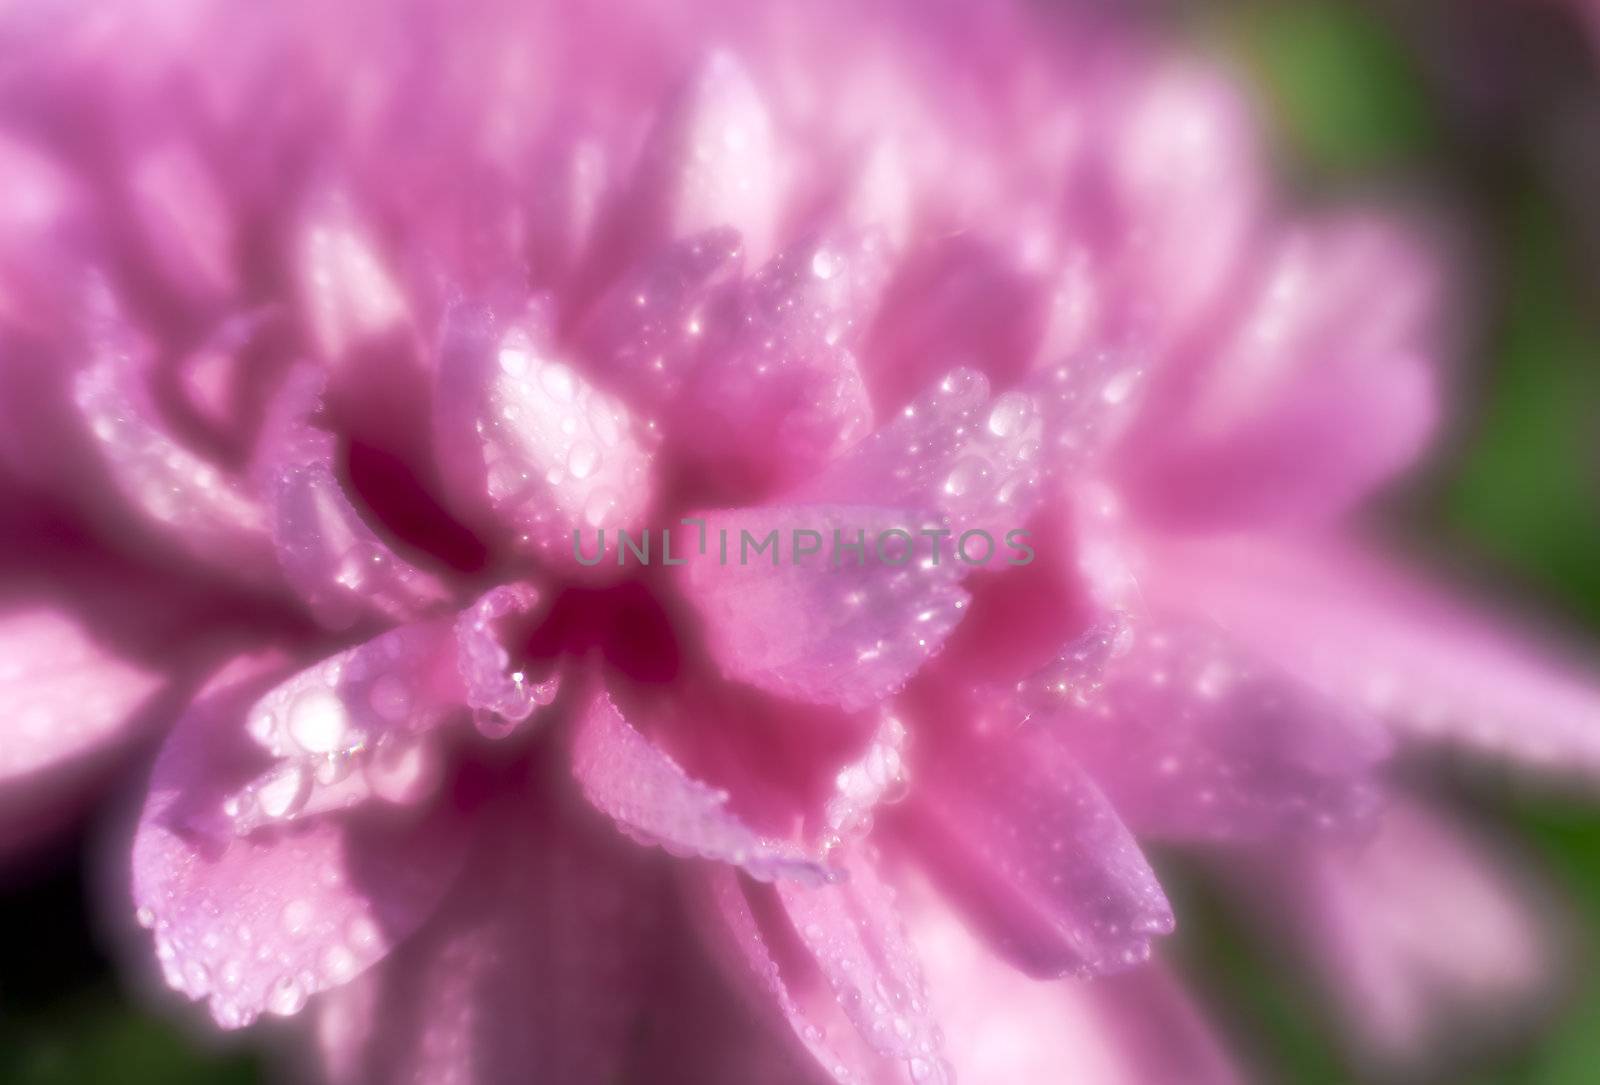 Rain drops on chrysanthemum petals by mulden